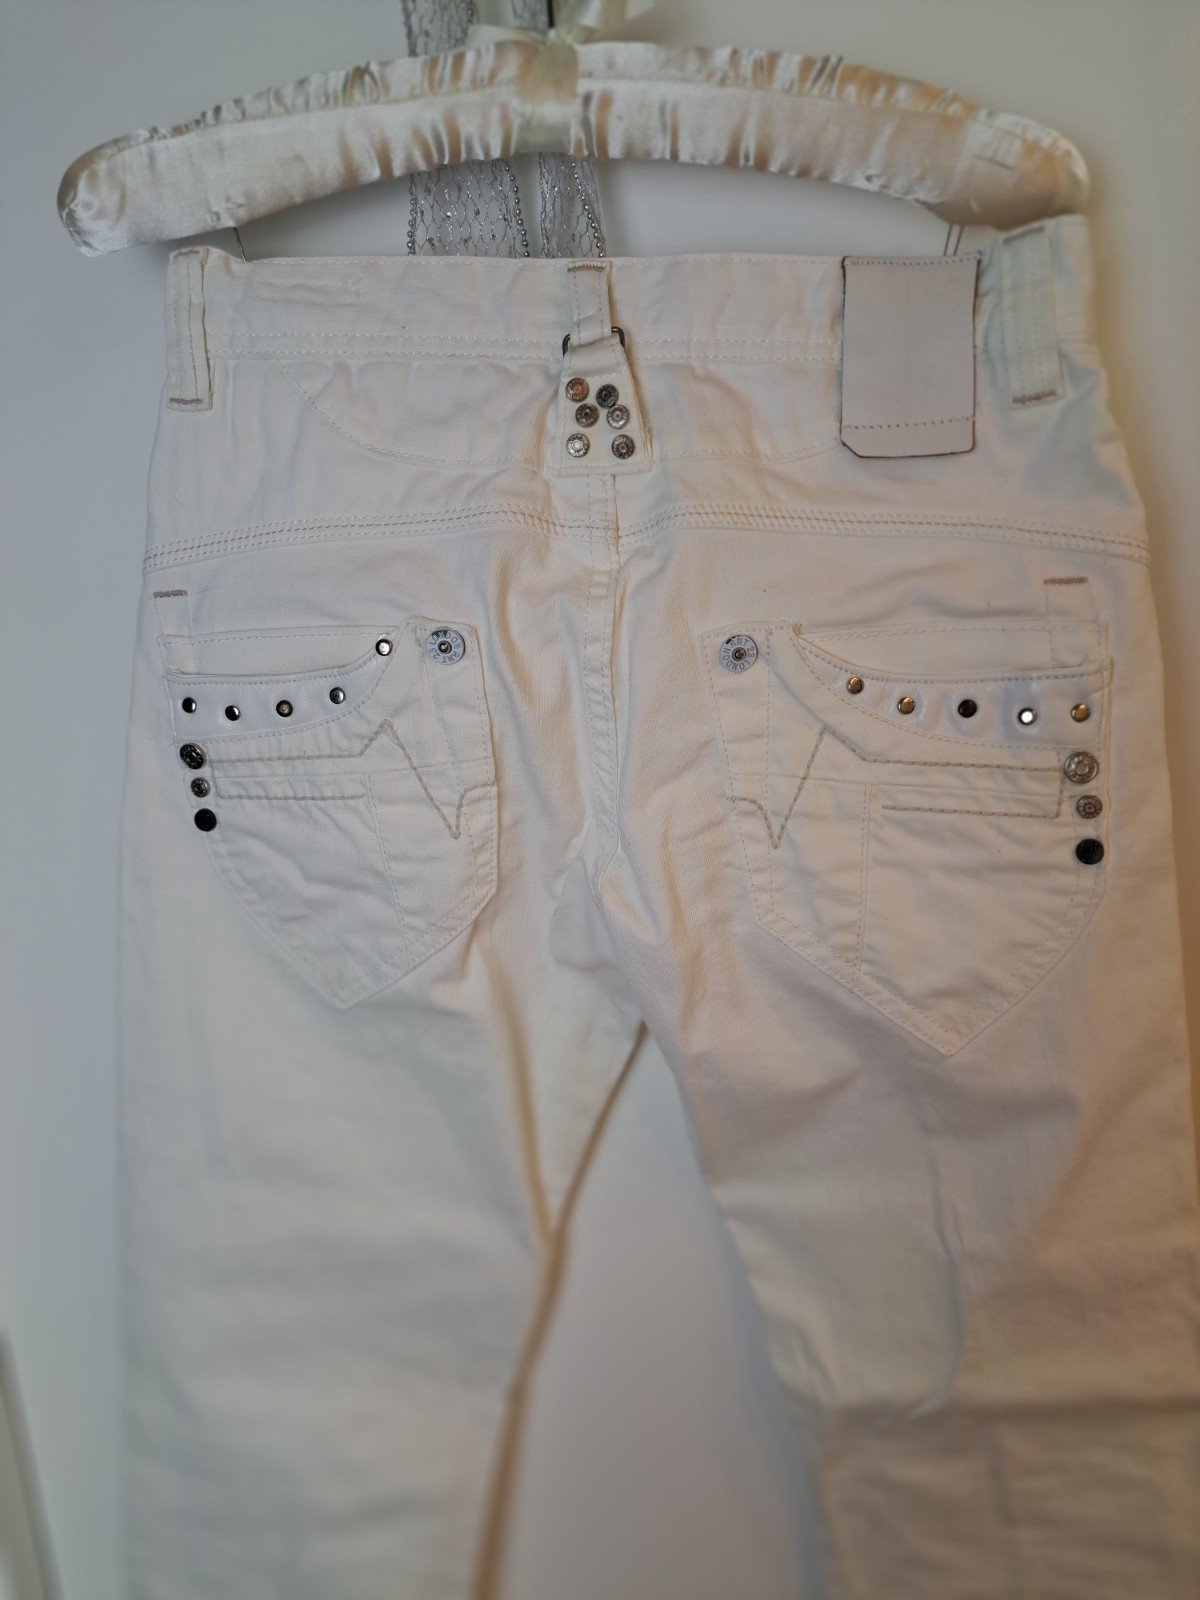 Cheap RNT 23 biker new white studded button front jeans cotton IRhgc2cTe Great